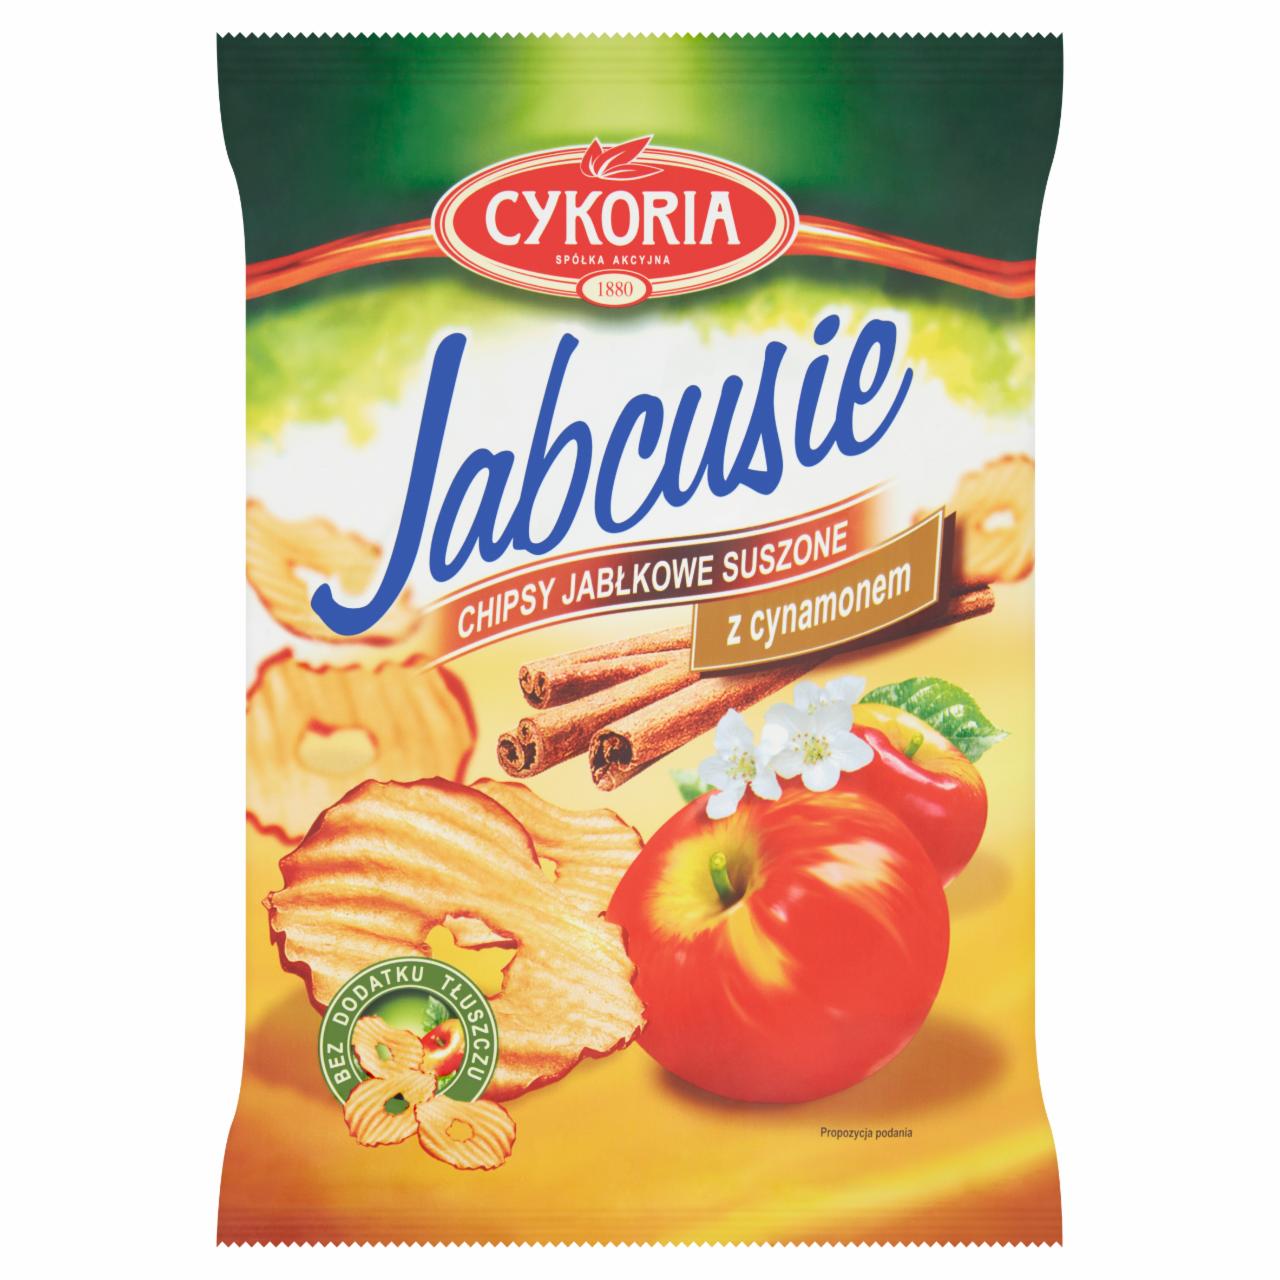 Photo - Cykoria Jabcusie Dried Apple Chips with Cinnamon 40 g